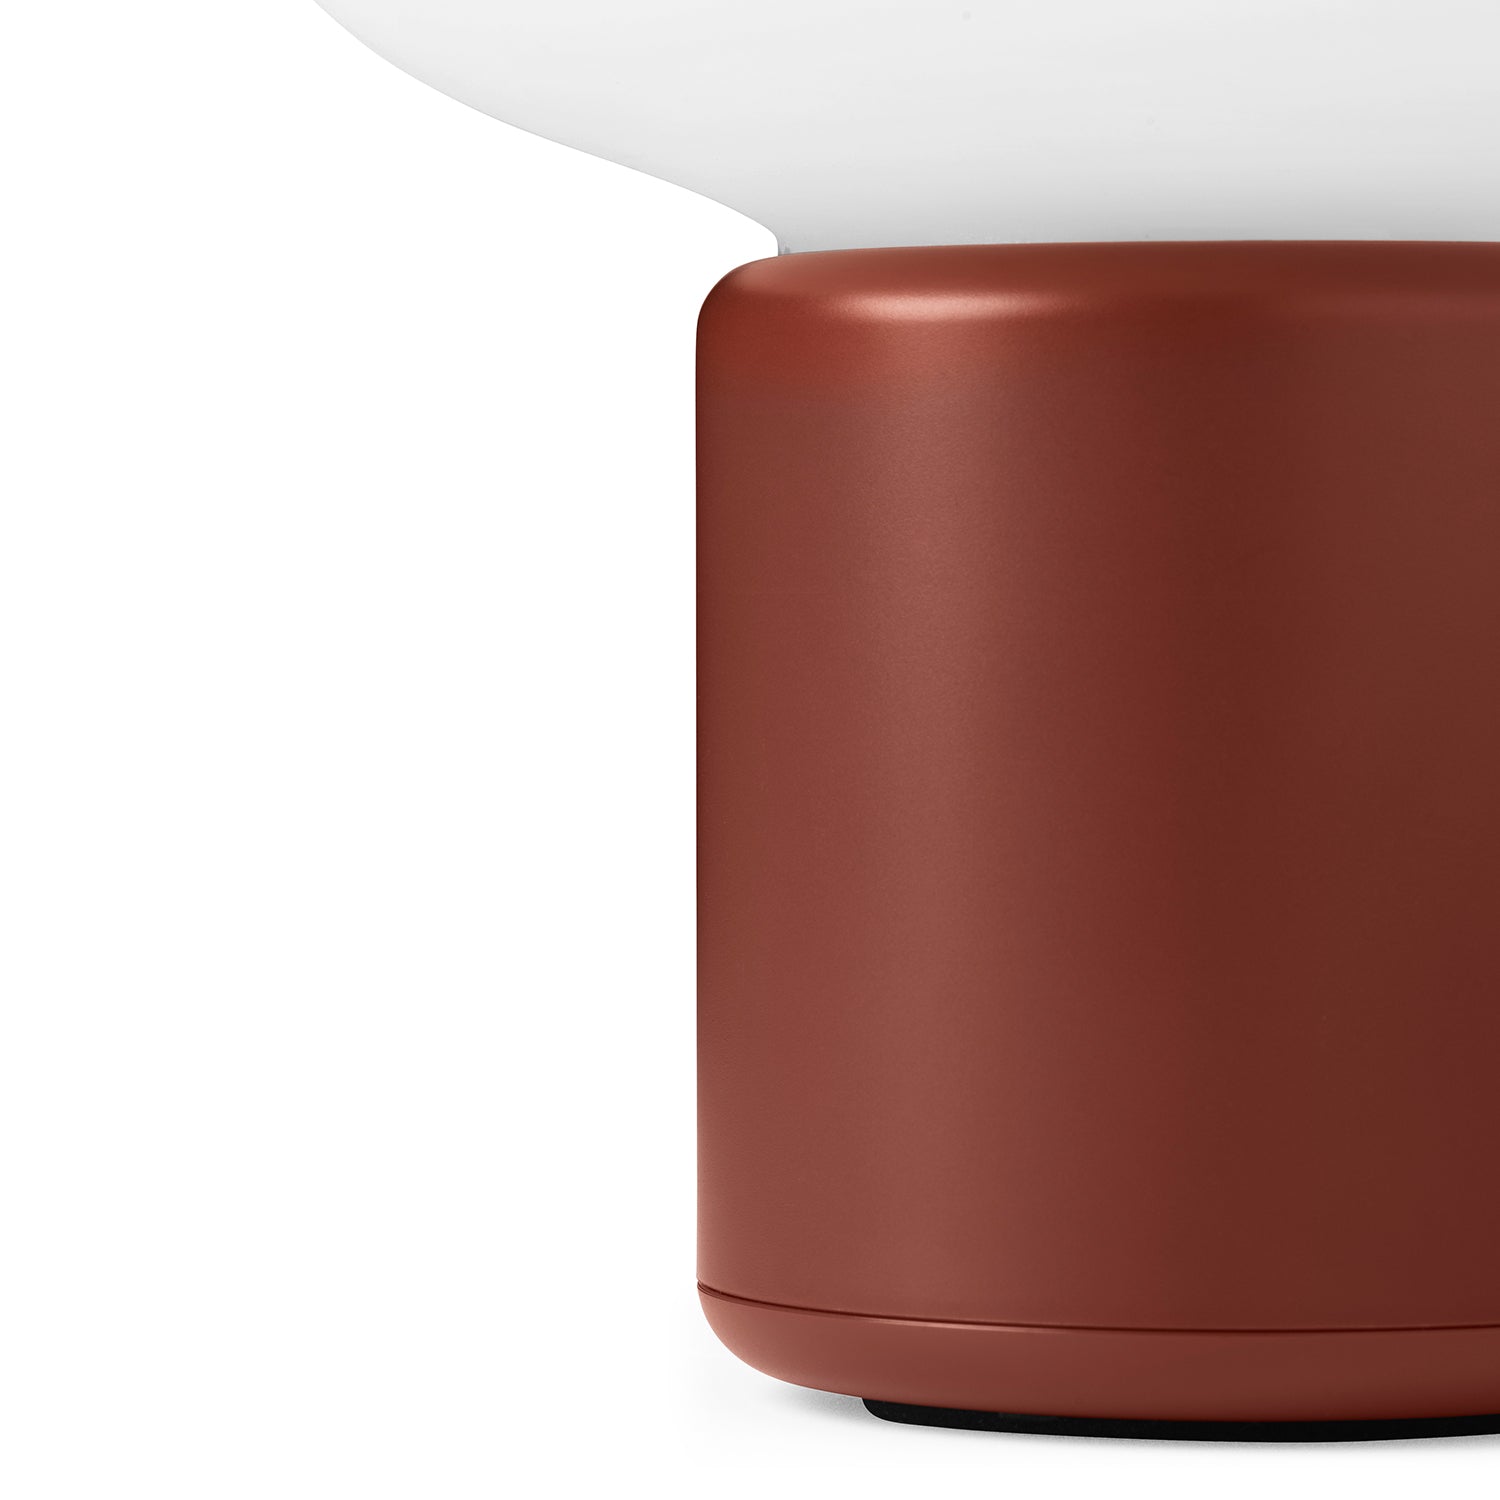 Karl-Johan Portable Table Lamp - The Design Choice